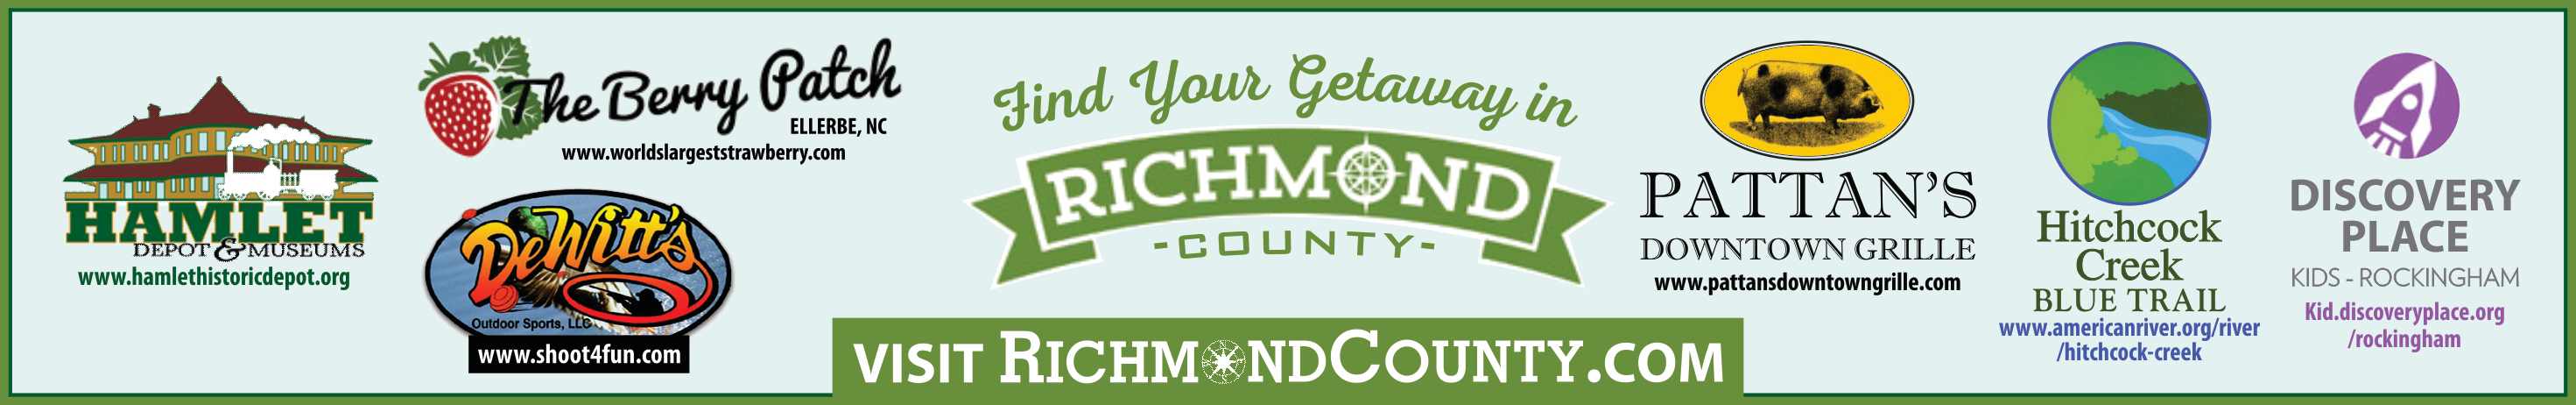 Richmond County Tourism Development Print Ad